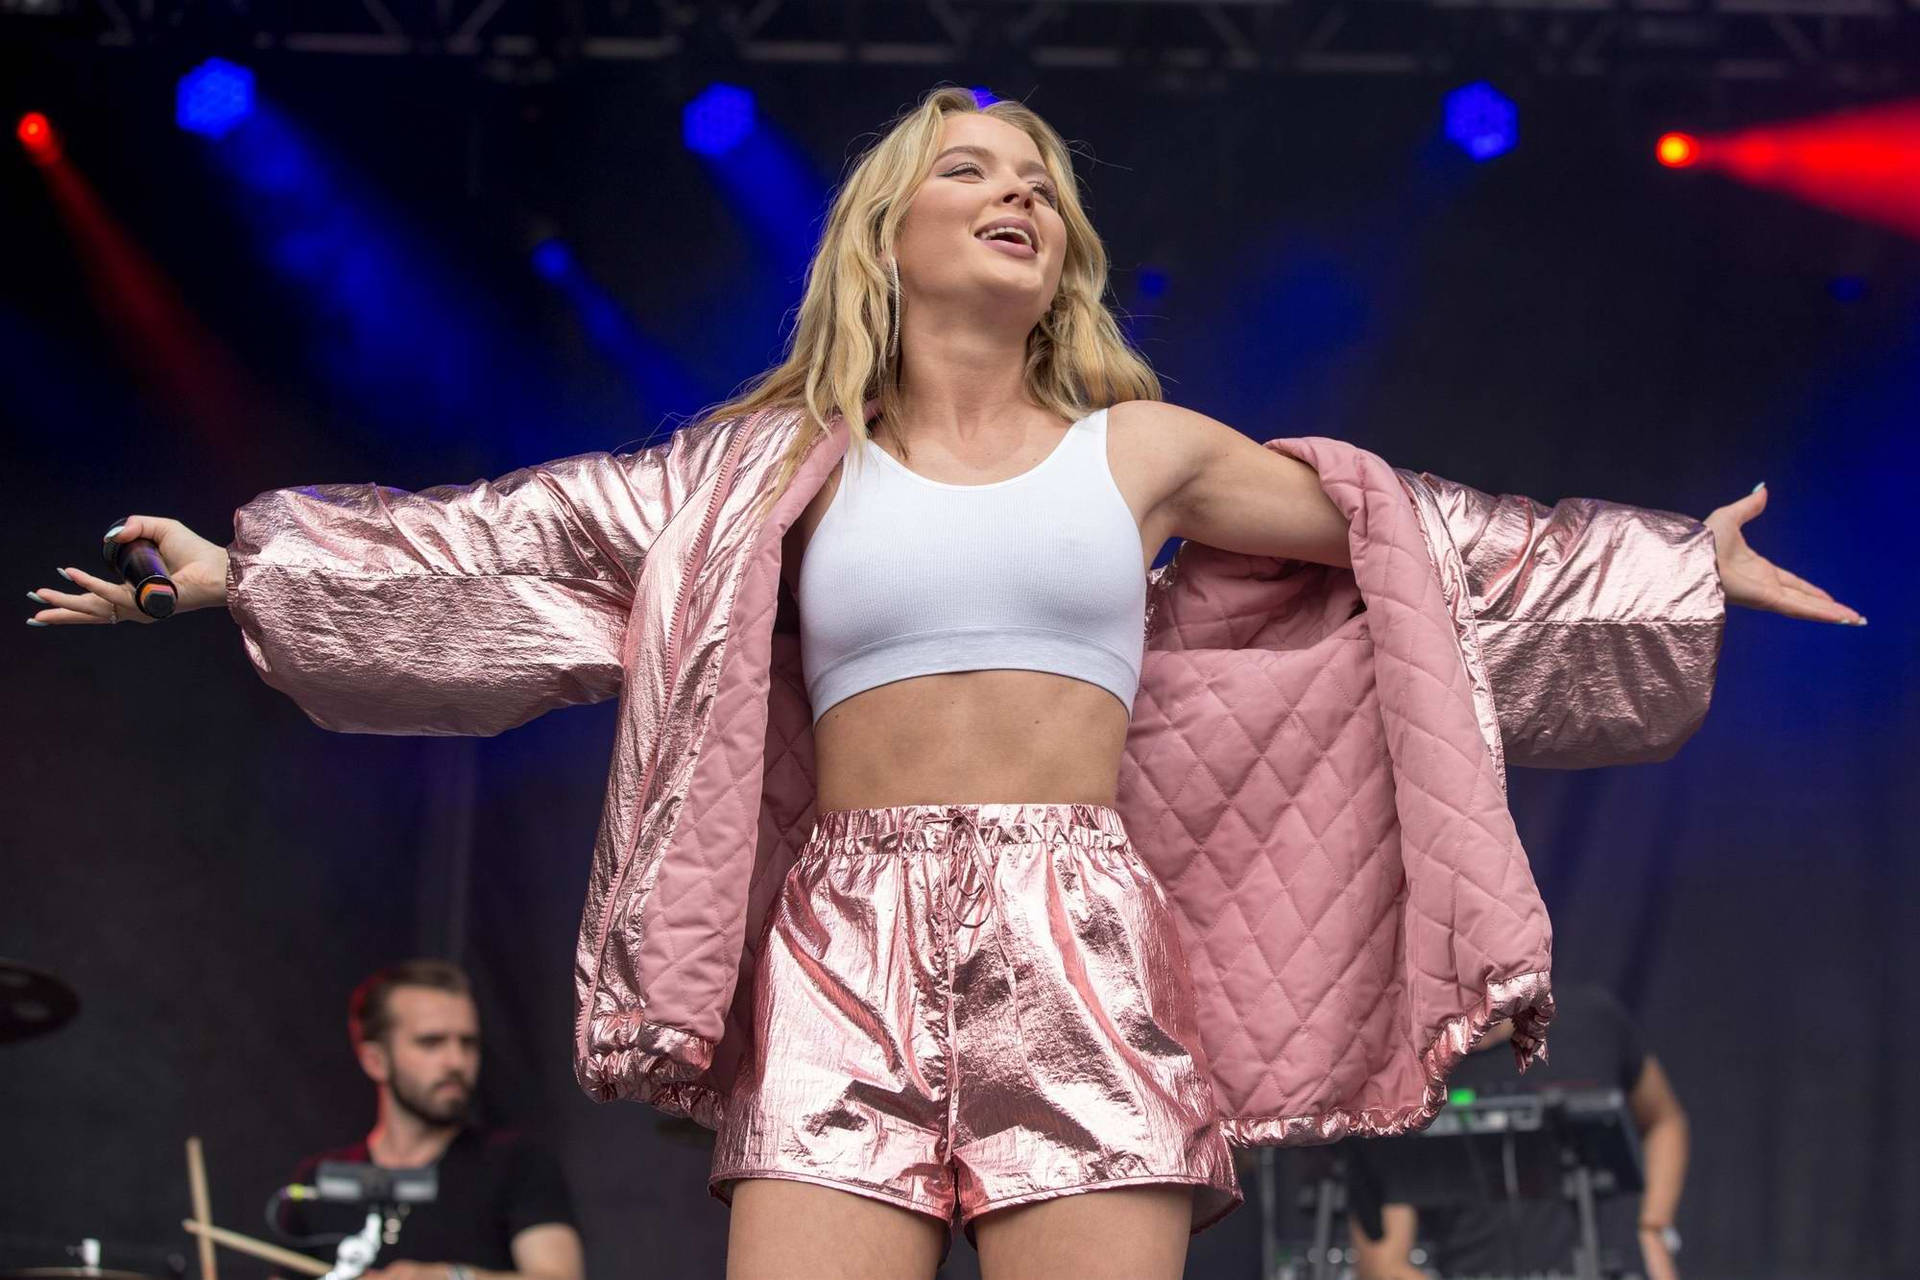 Swedish Pop Sensation Zara Larsson Performing At Lollapalooza Background